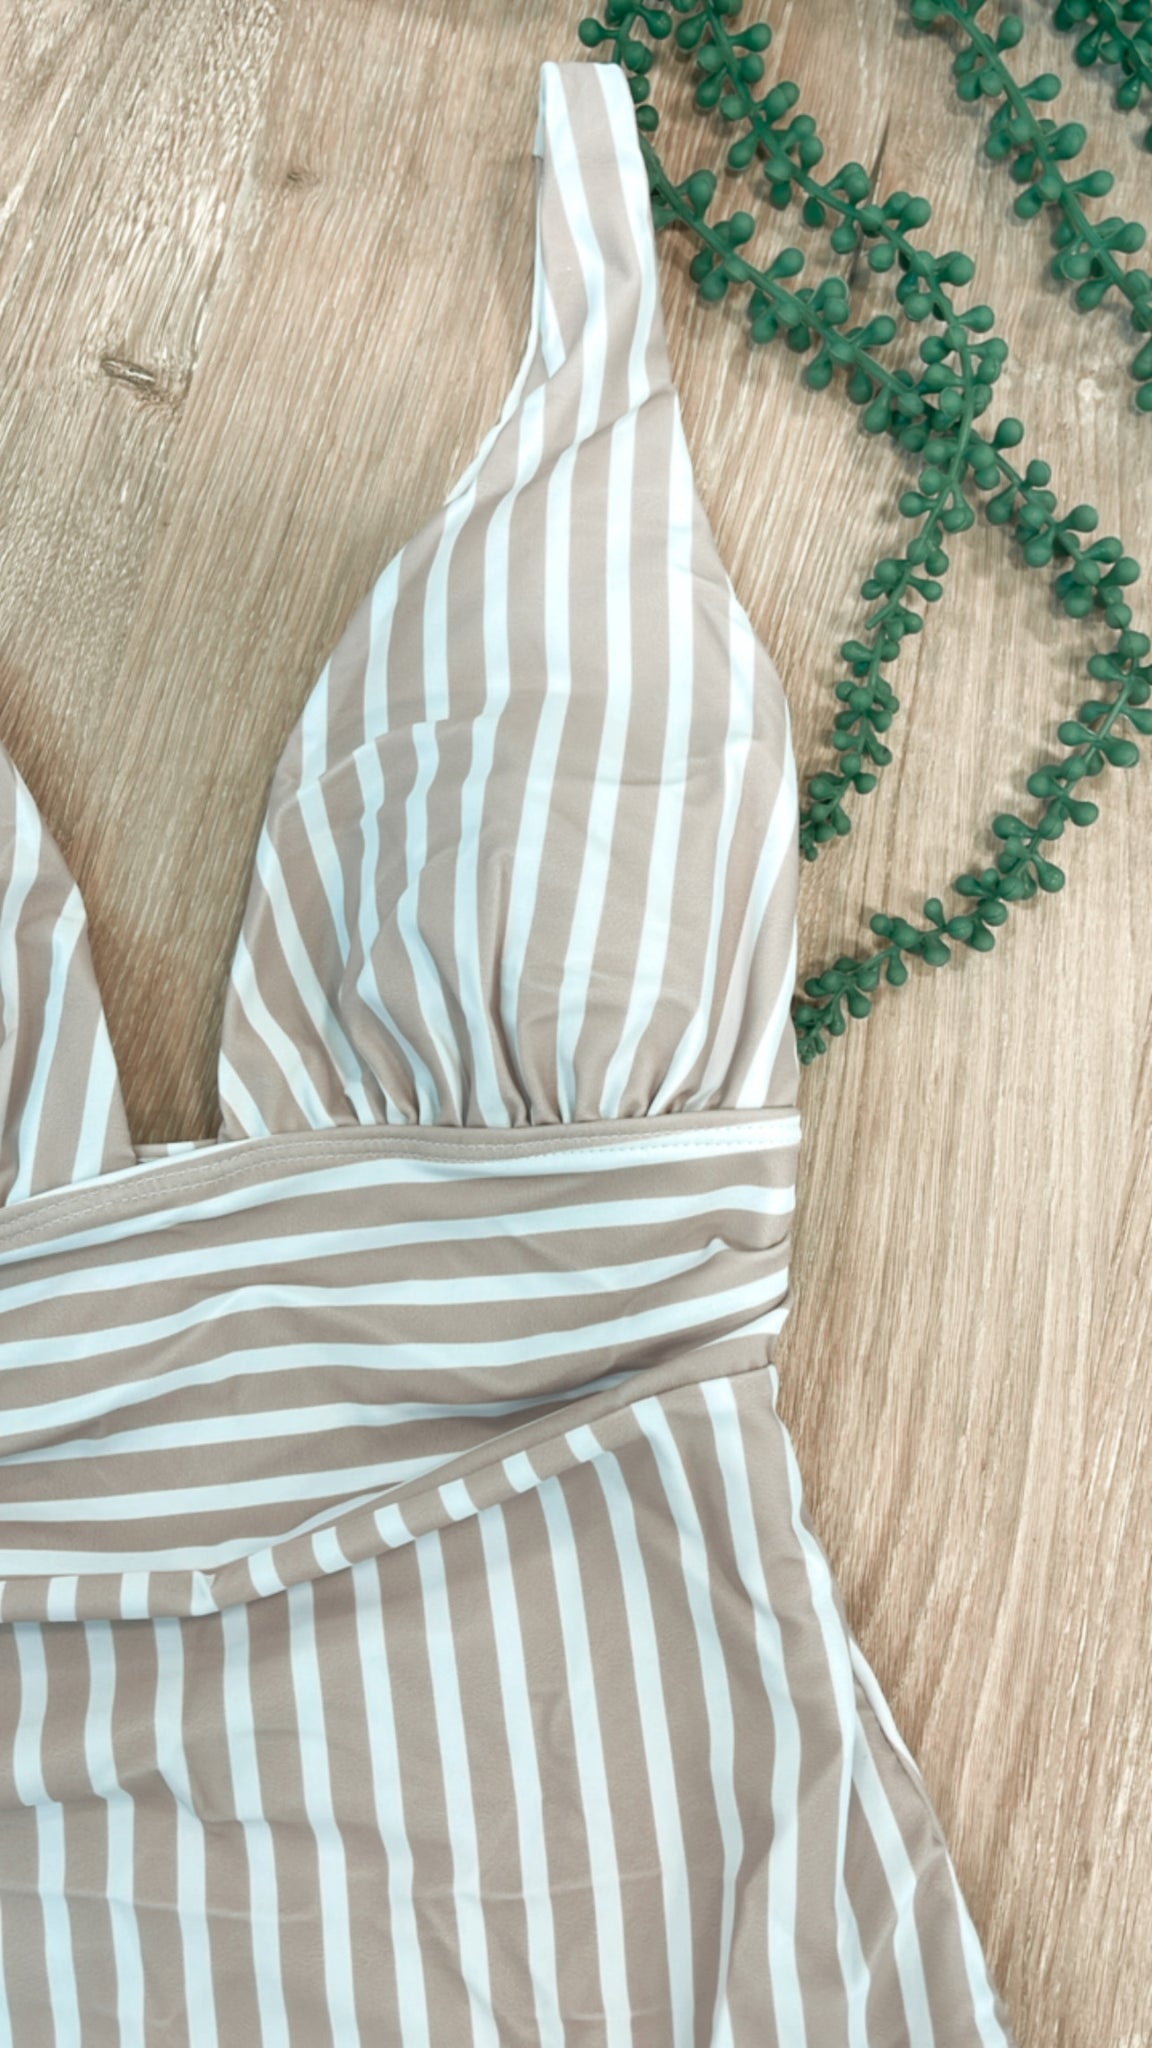 Striped Classy Swimsuit